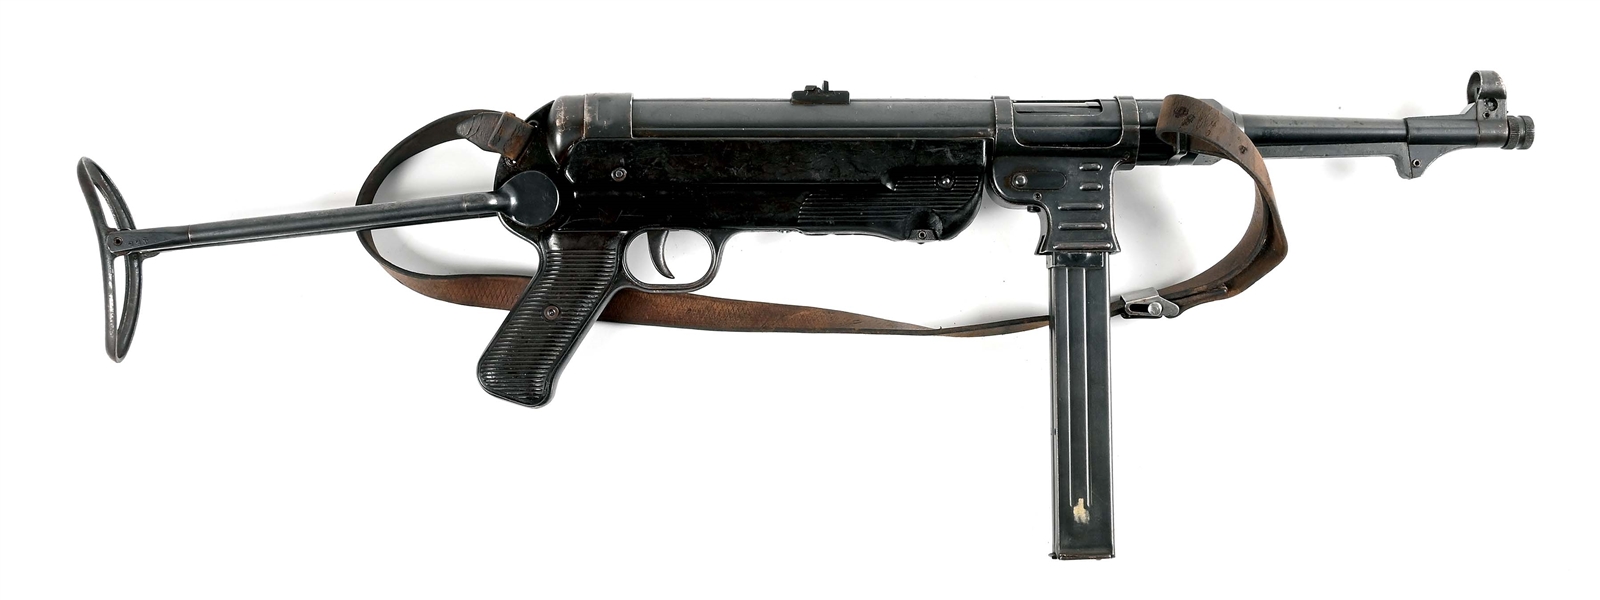 (N) INTER AMERICAN / STEYR "42" DATE MP40 SUBMACHINE GUN (PRE-86 DEALER SAMPLE).